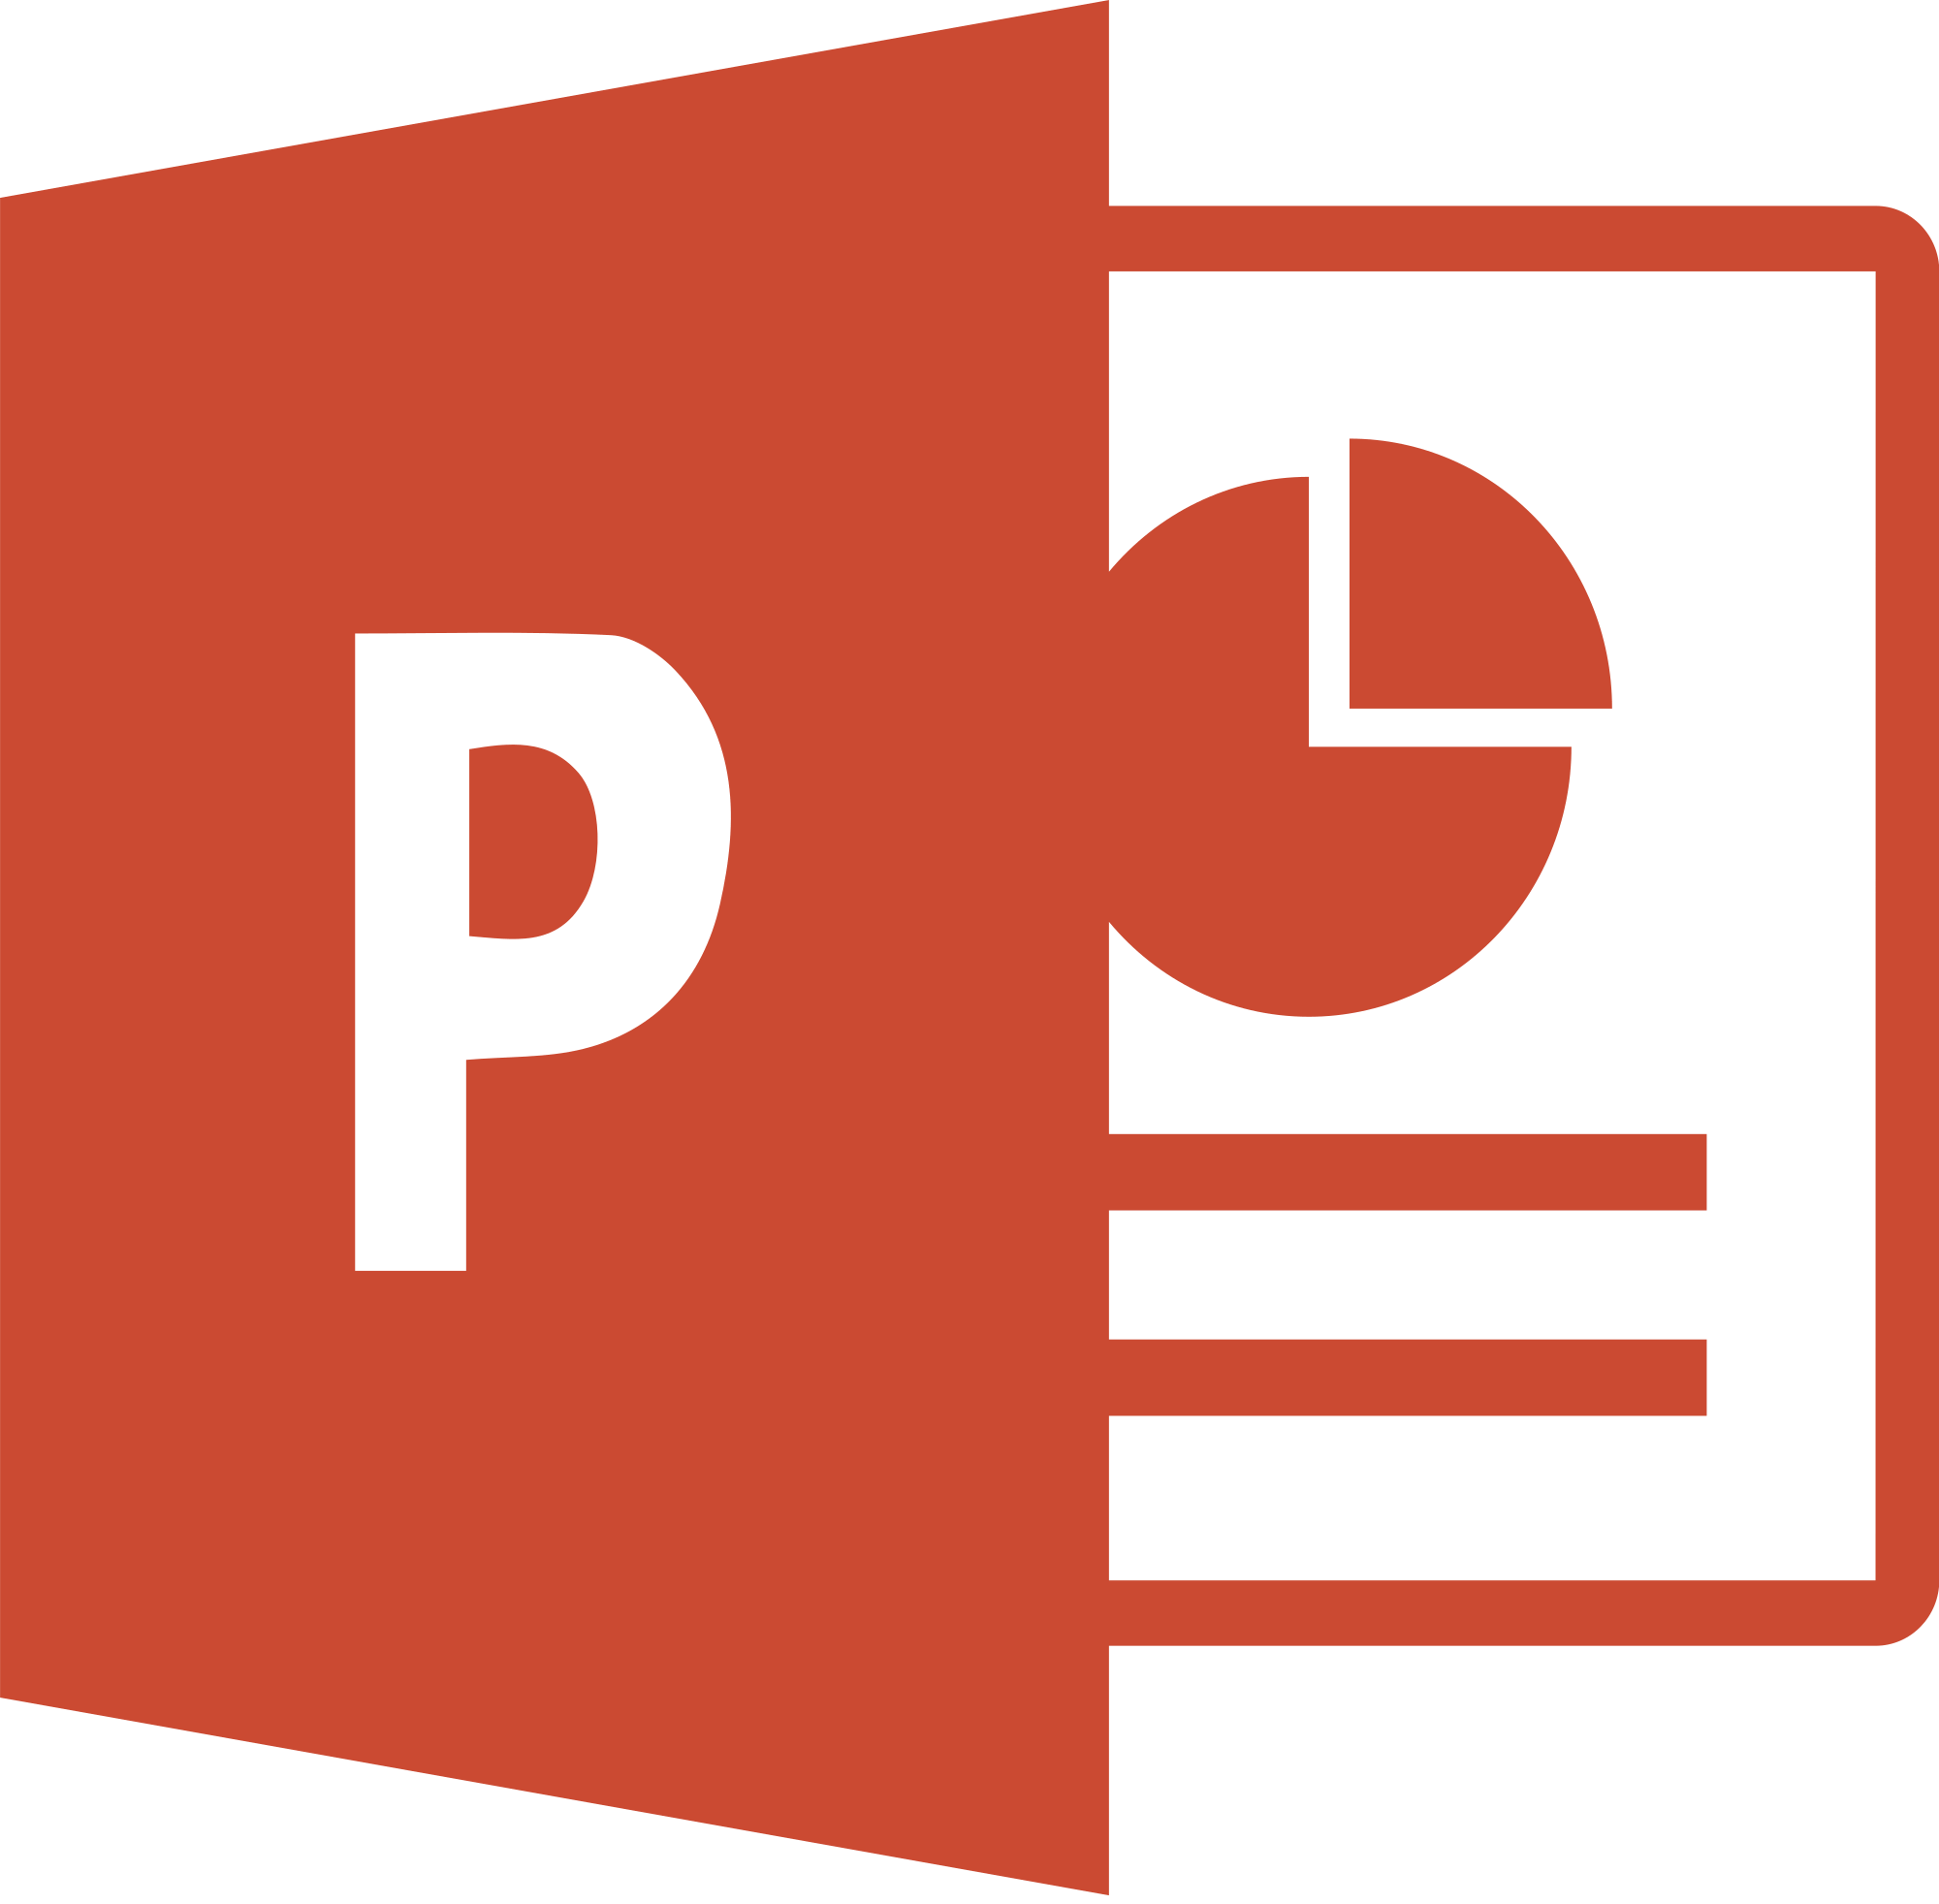 PowerPoint Logo - File:Microsoft PowerPoint 2013 logo.svg - Wikimedia Commons